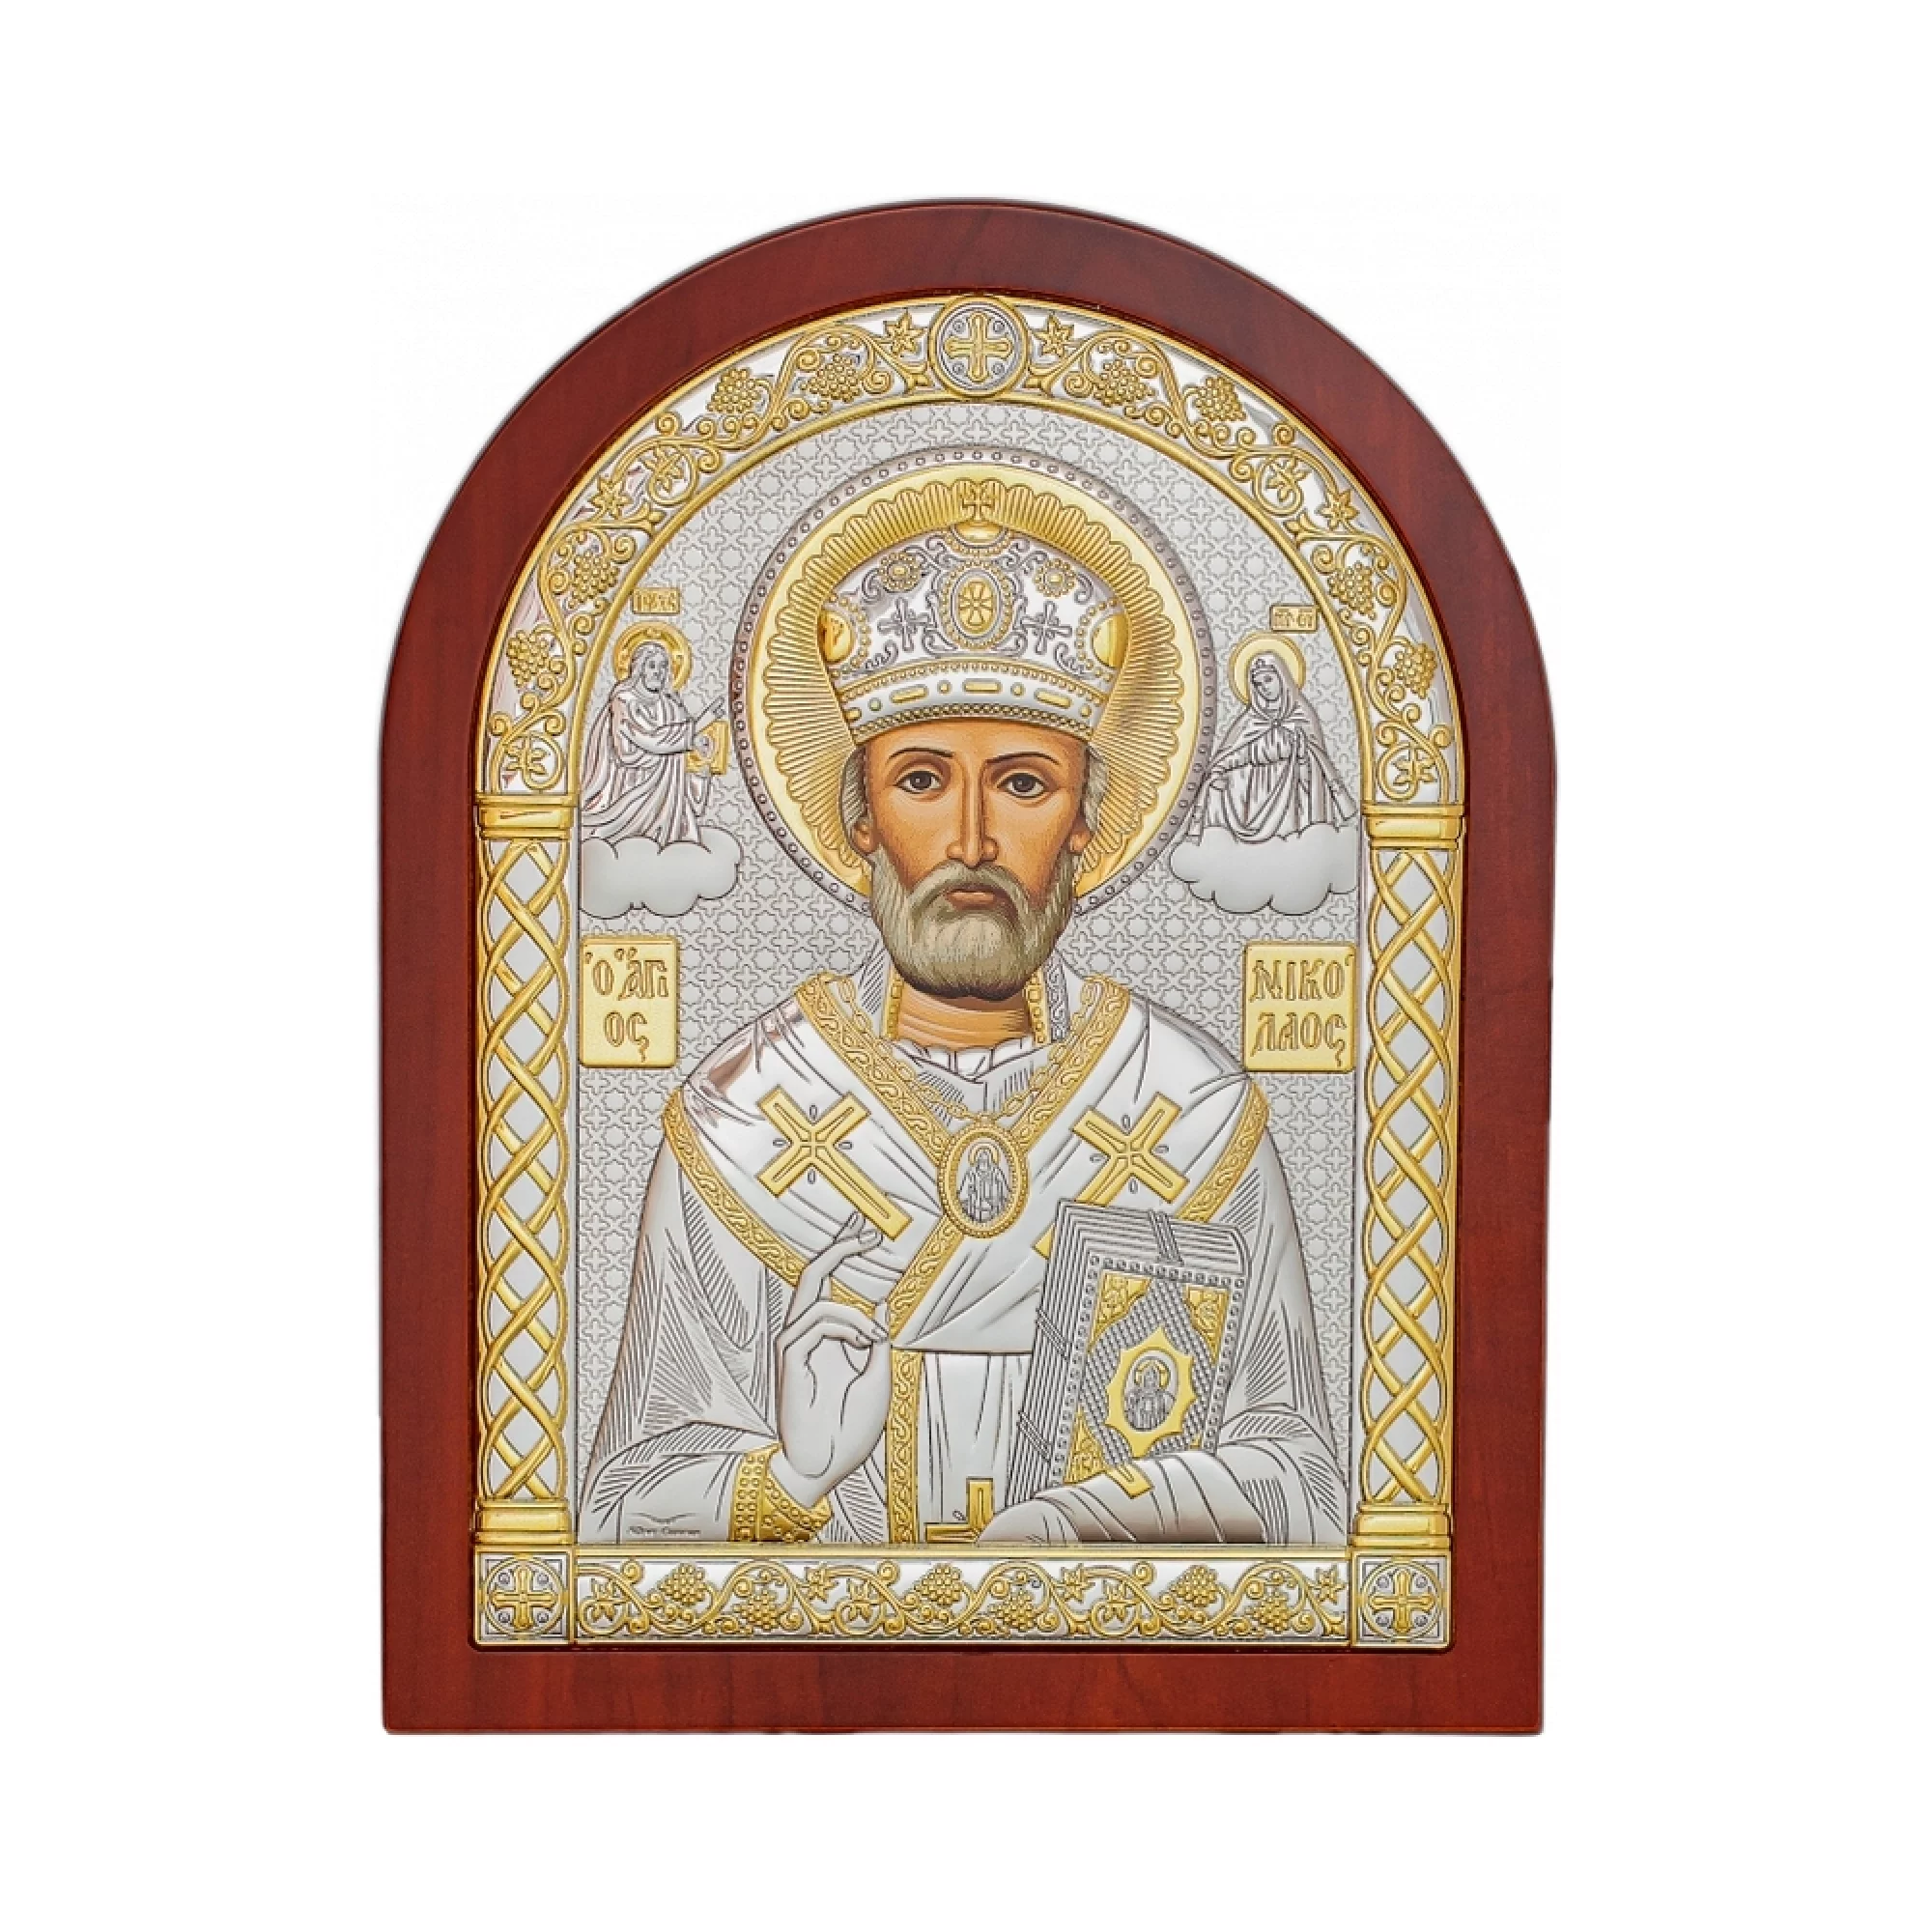 Икона из серебра "Николай Чудотворец" 147х197 мм - 1316279 – изображение 1